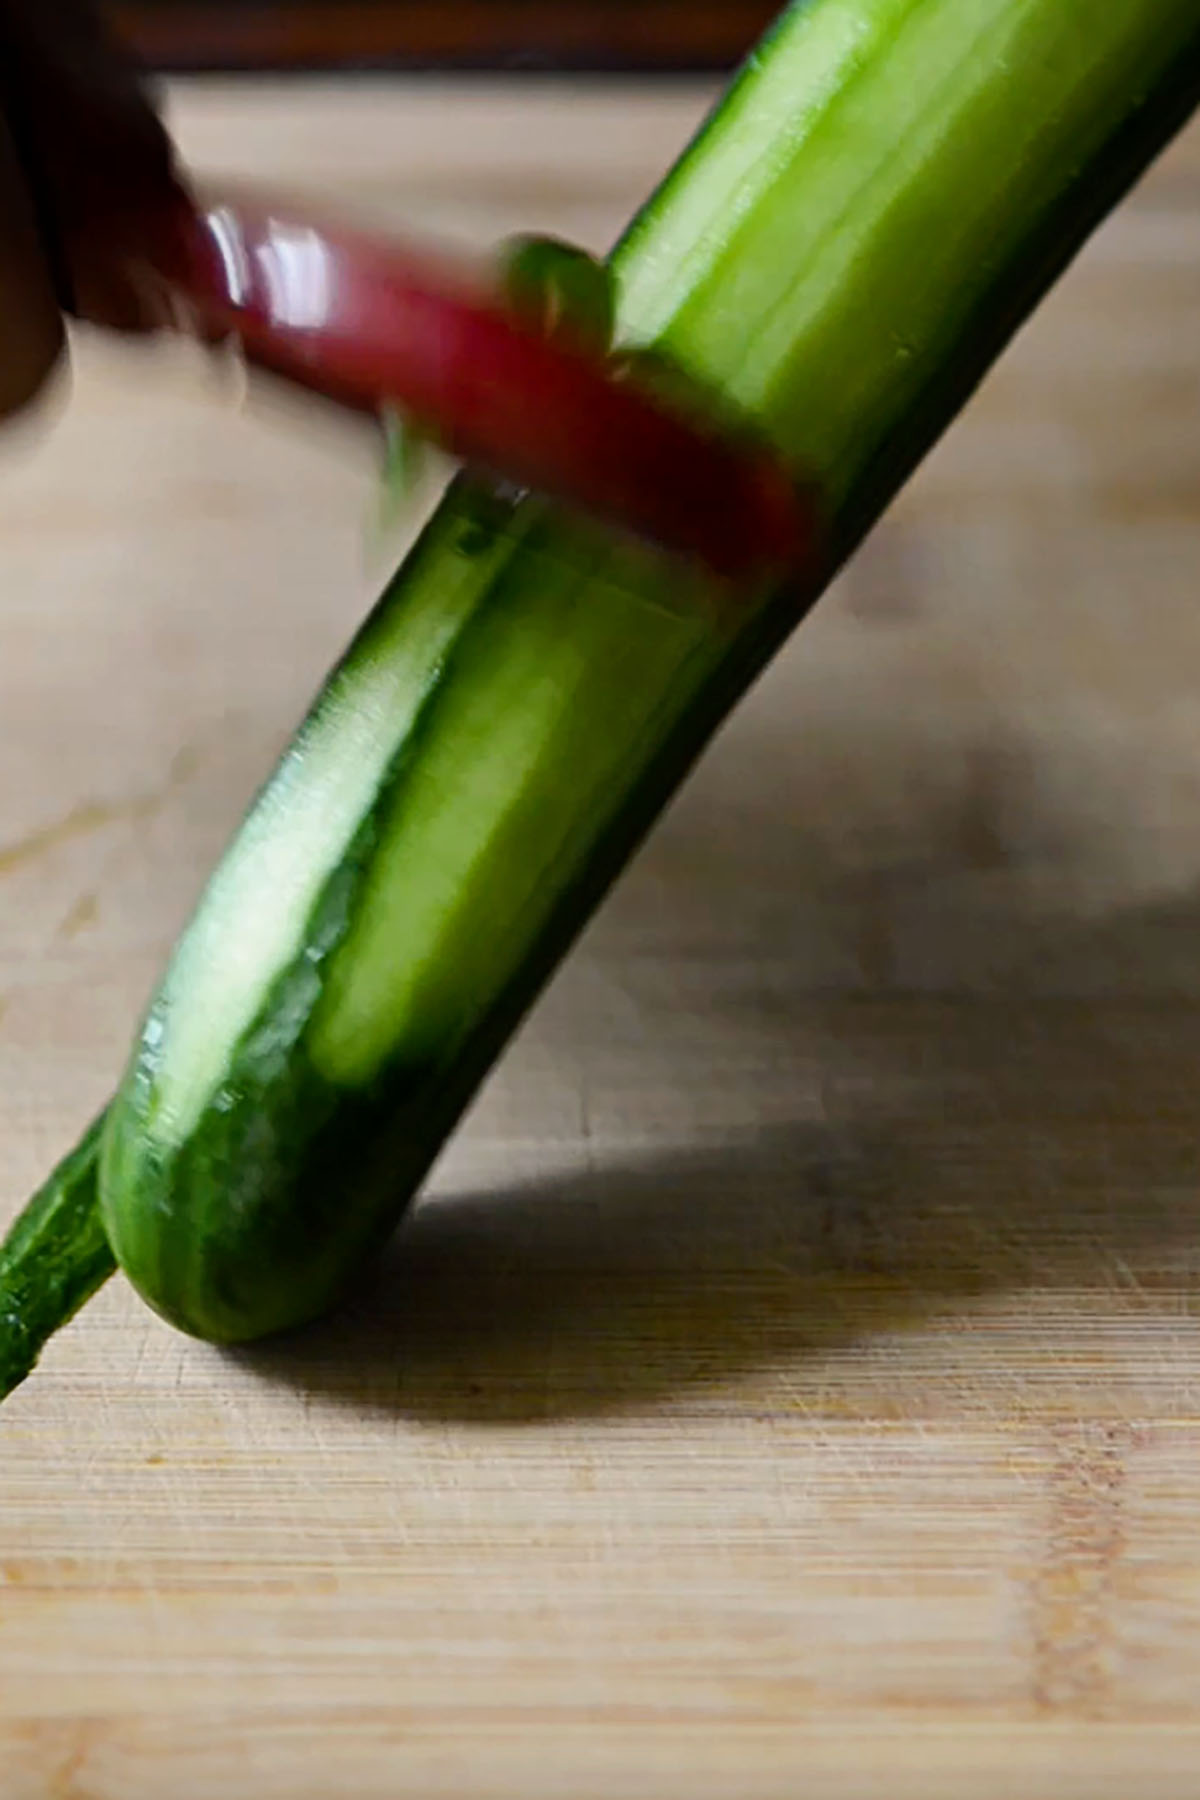 English cucumber being peeled.